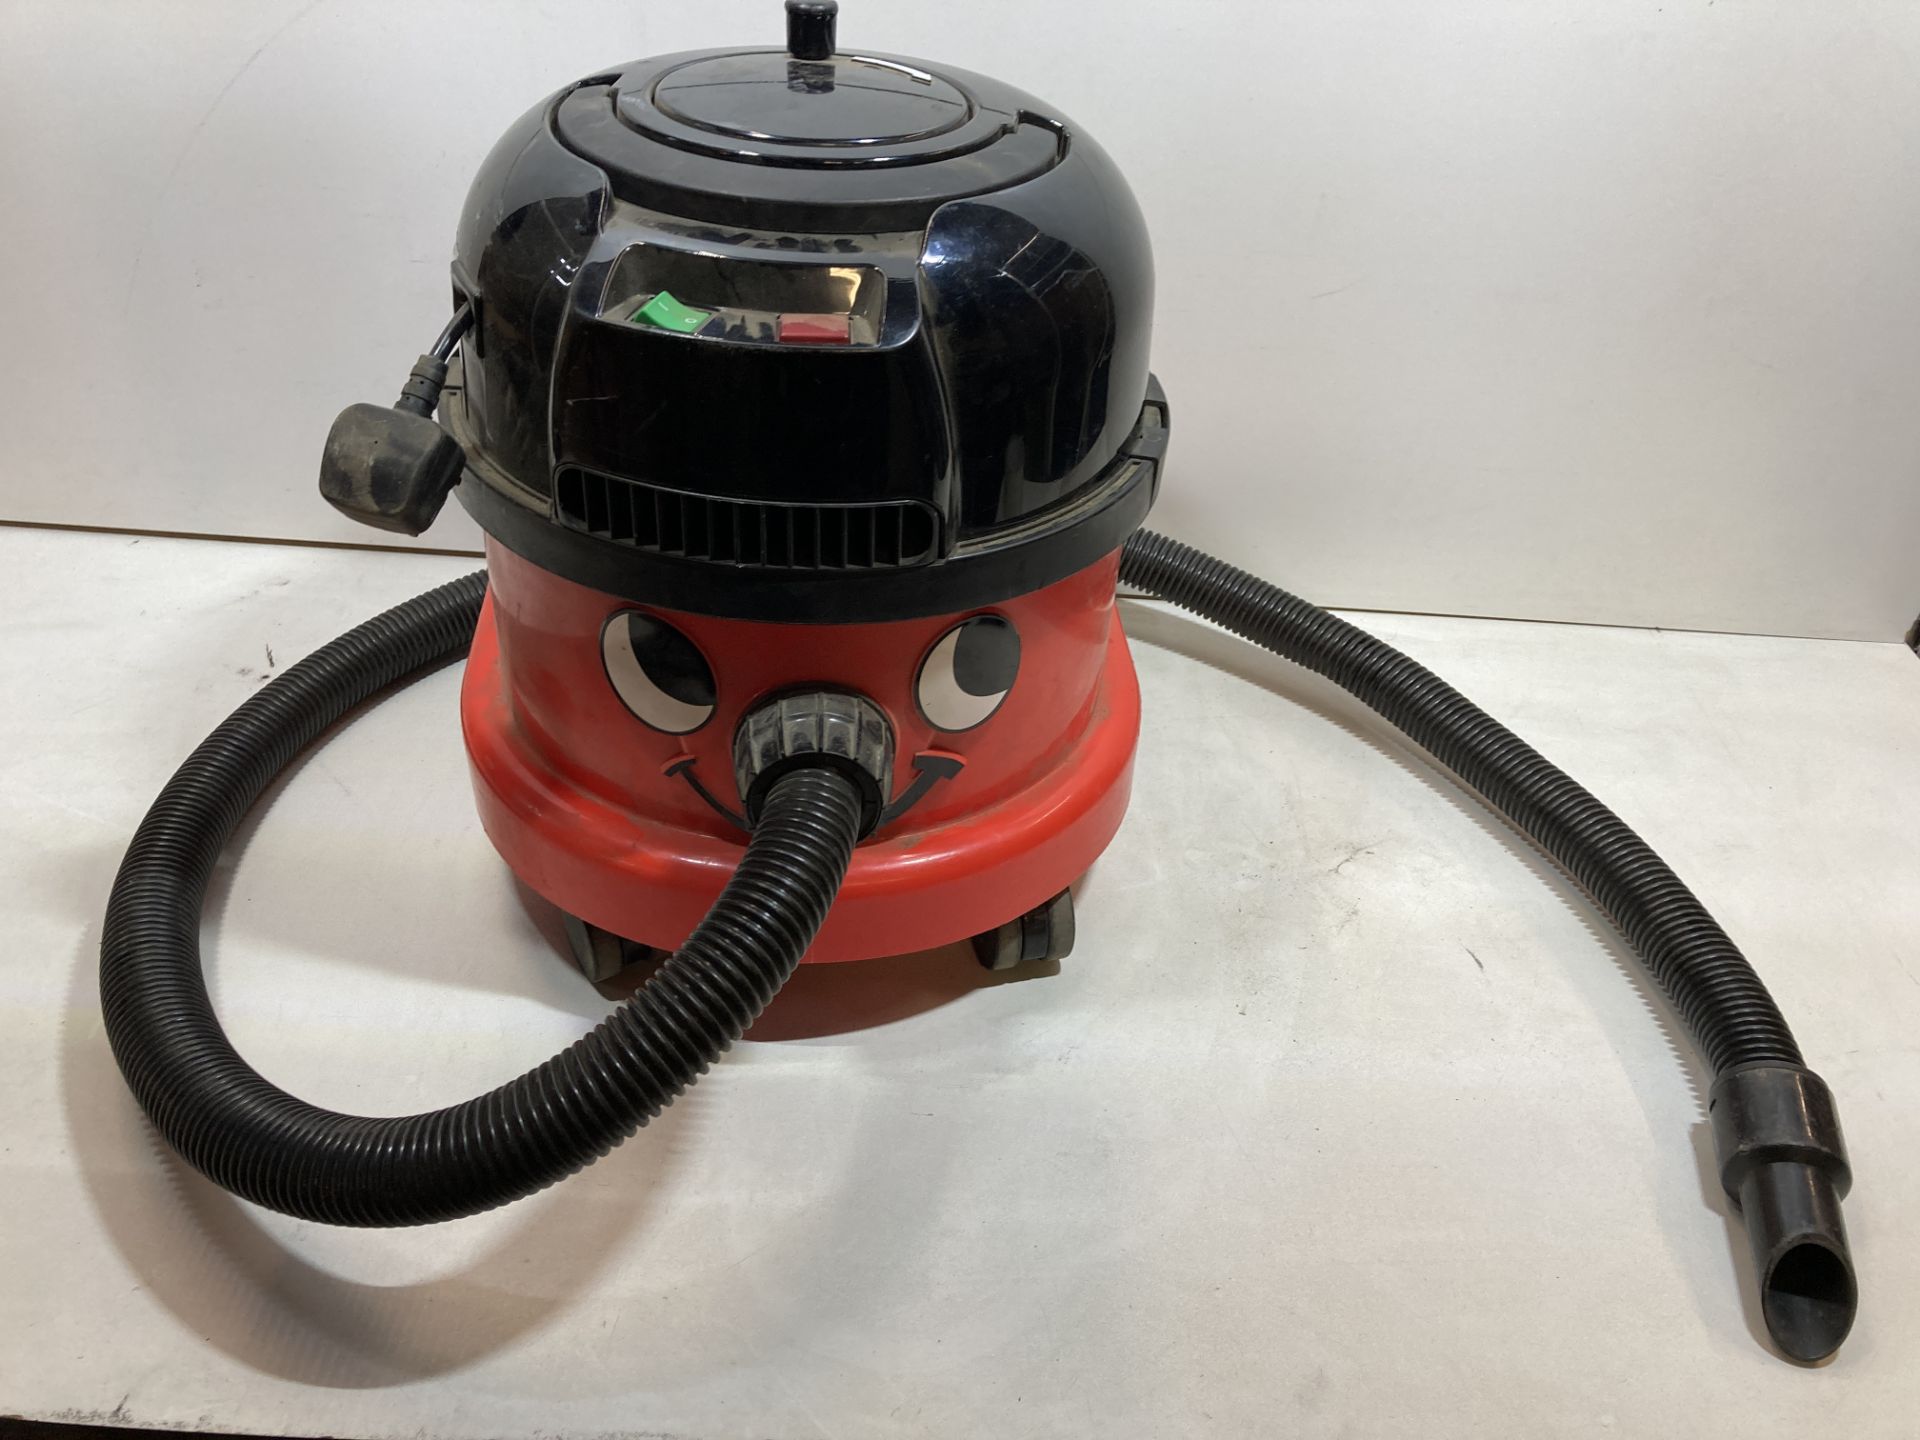 Henry Vacuum Cleaner W/ Hose